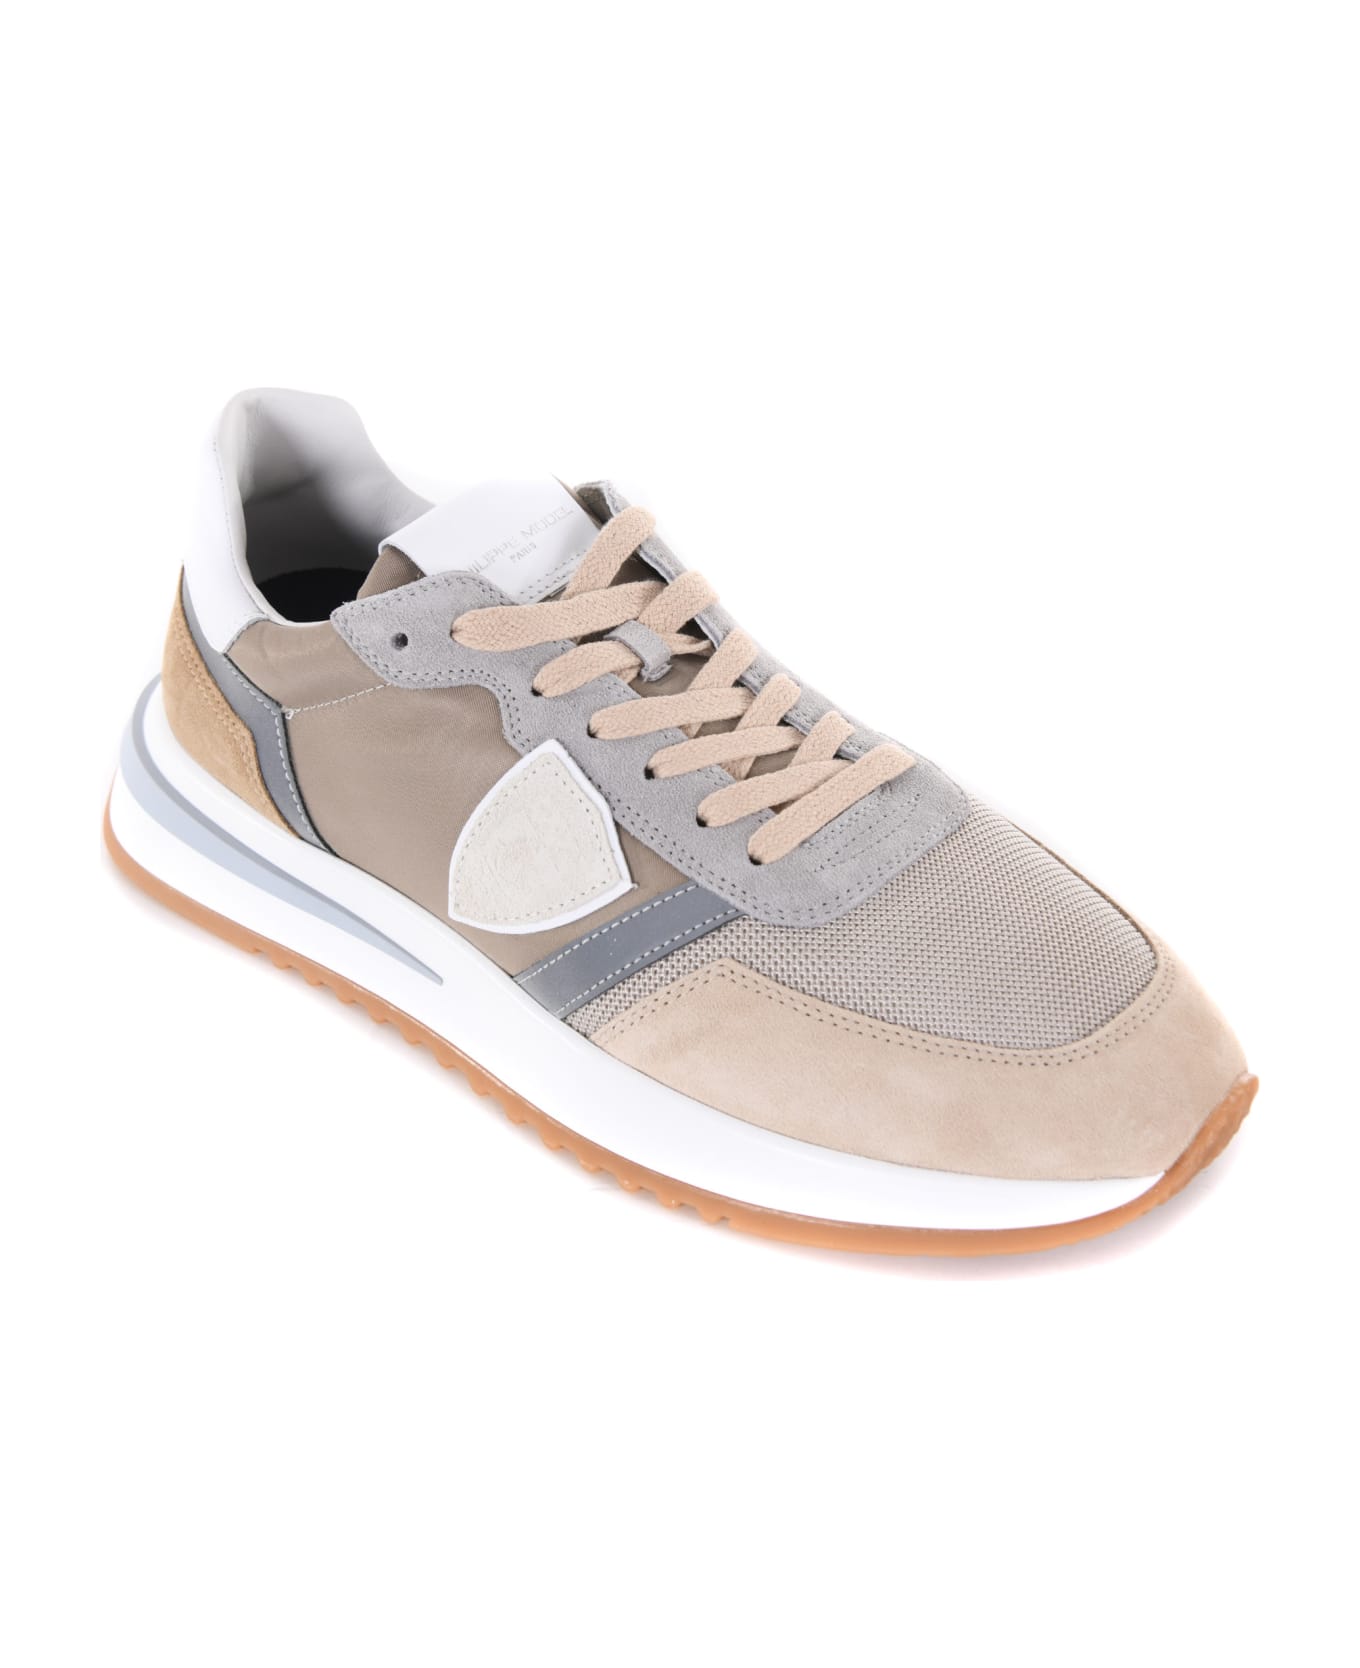 Philippe Model Sneakers - Beige/grigio スニーカー